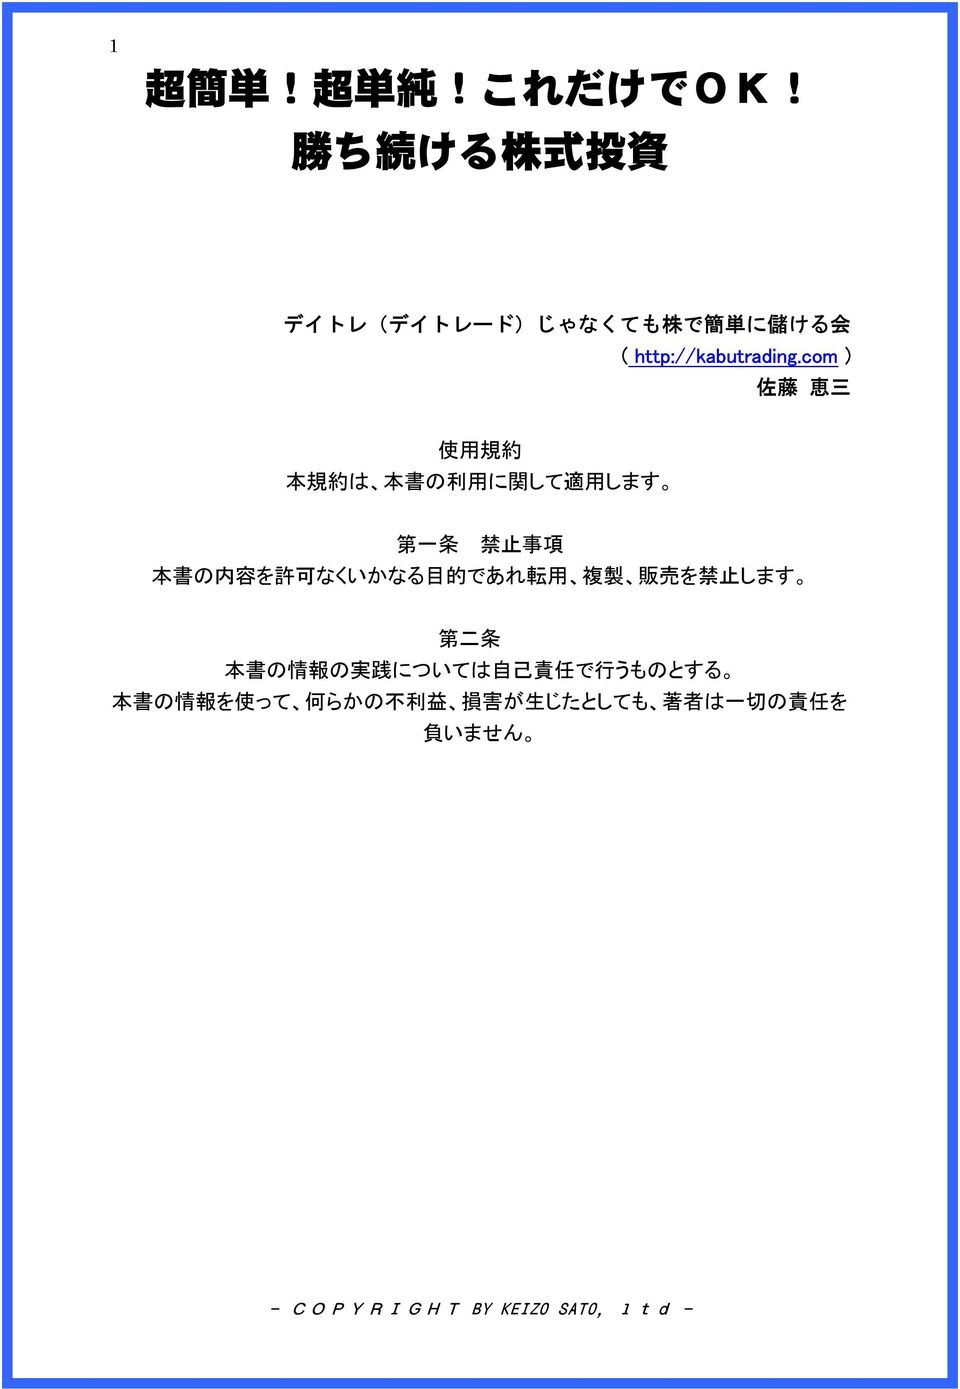 com ) 佐 藤 恵 三 使 用 規 約 本 規 約 は 本 書 の 利 用 に 関 して 適 用 します 第 一 条 禁 止 事 項 本 書 の 内 容 を 許